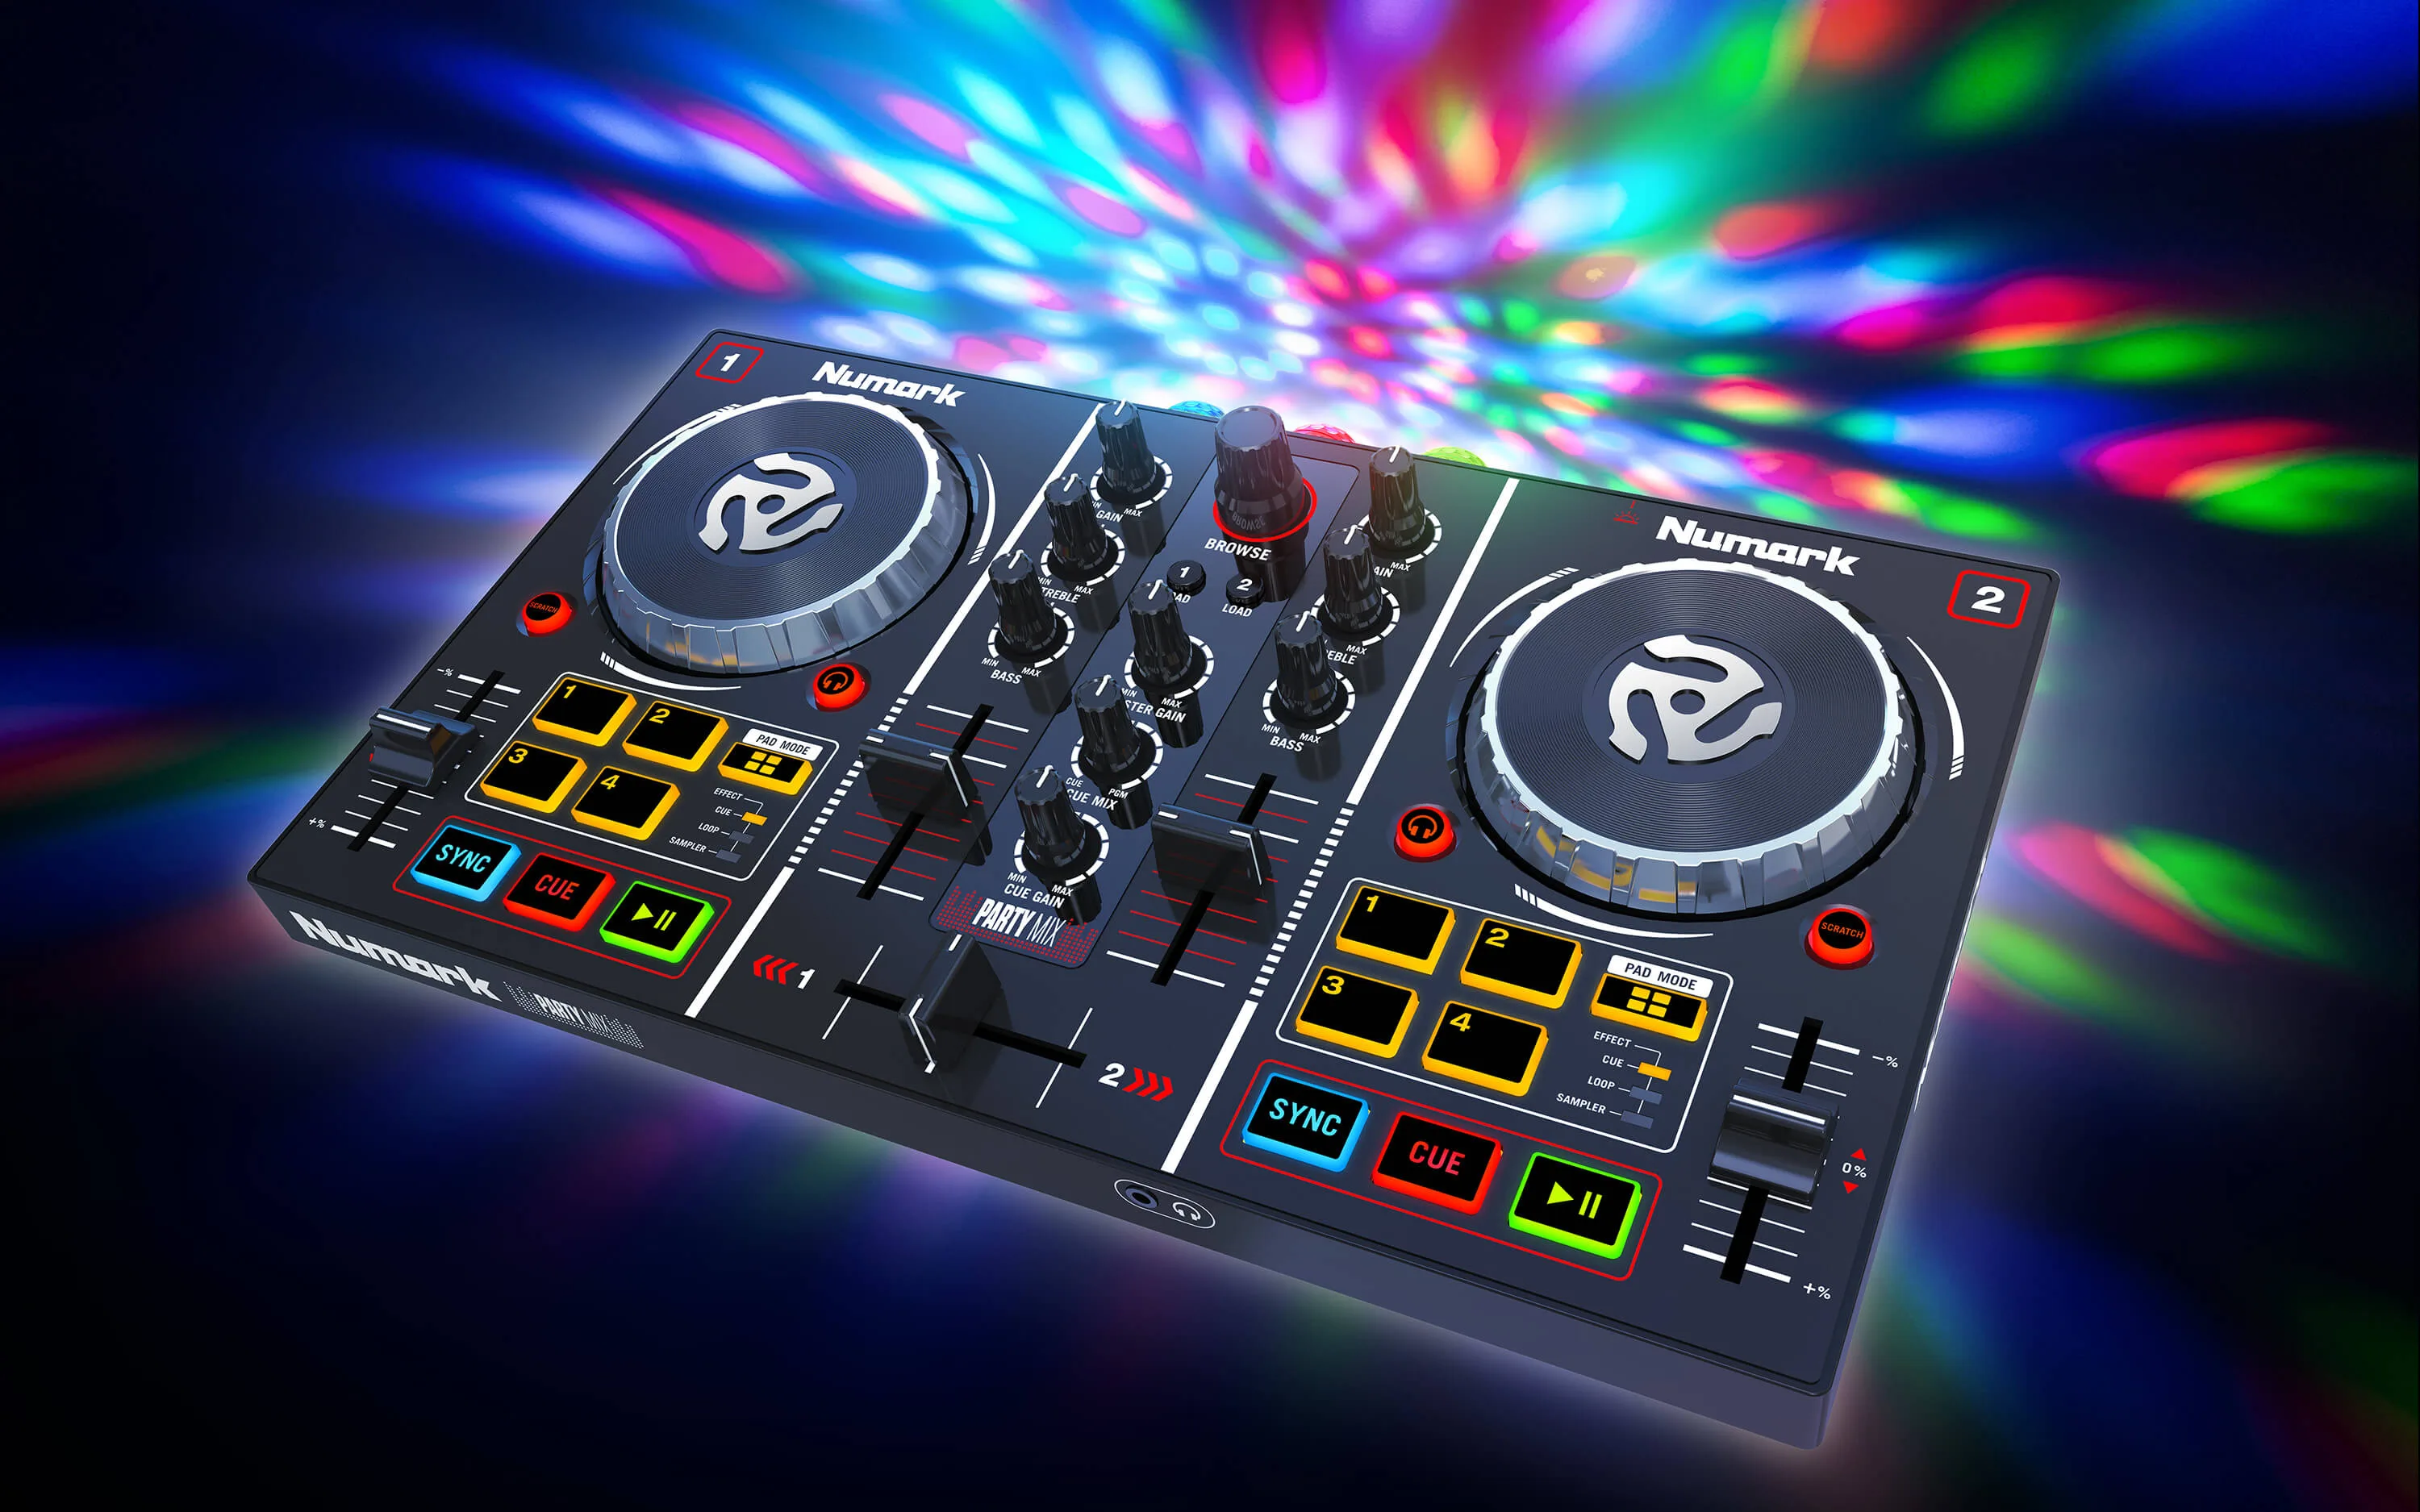 Numark's Party Mix DJ controller now includes Serato DJ Lite